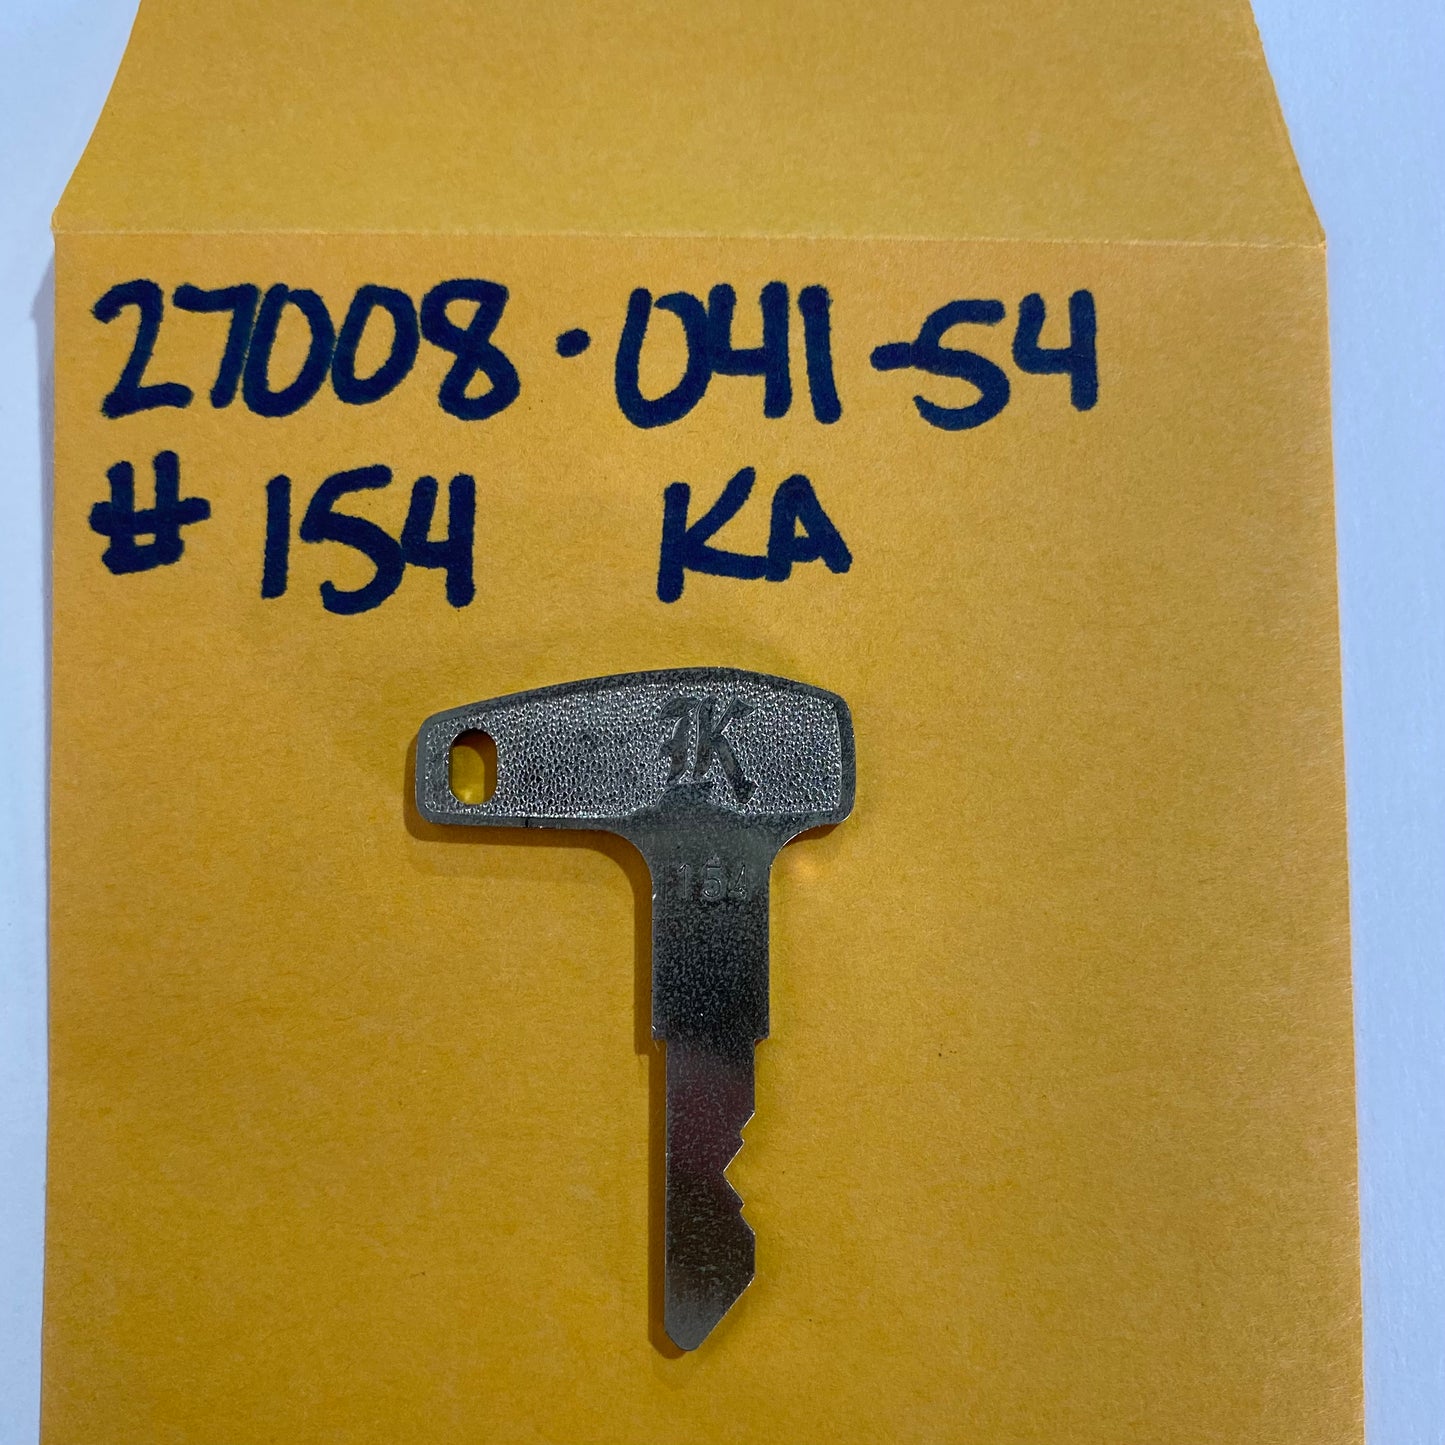 Kawasaki Key Set #154 27008-041-54